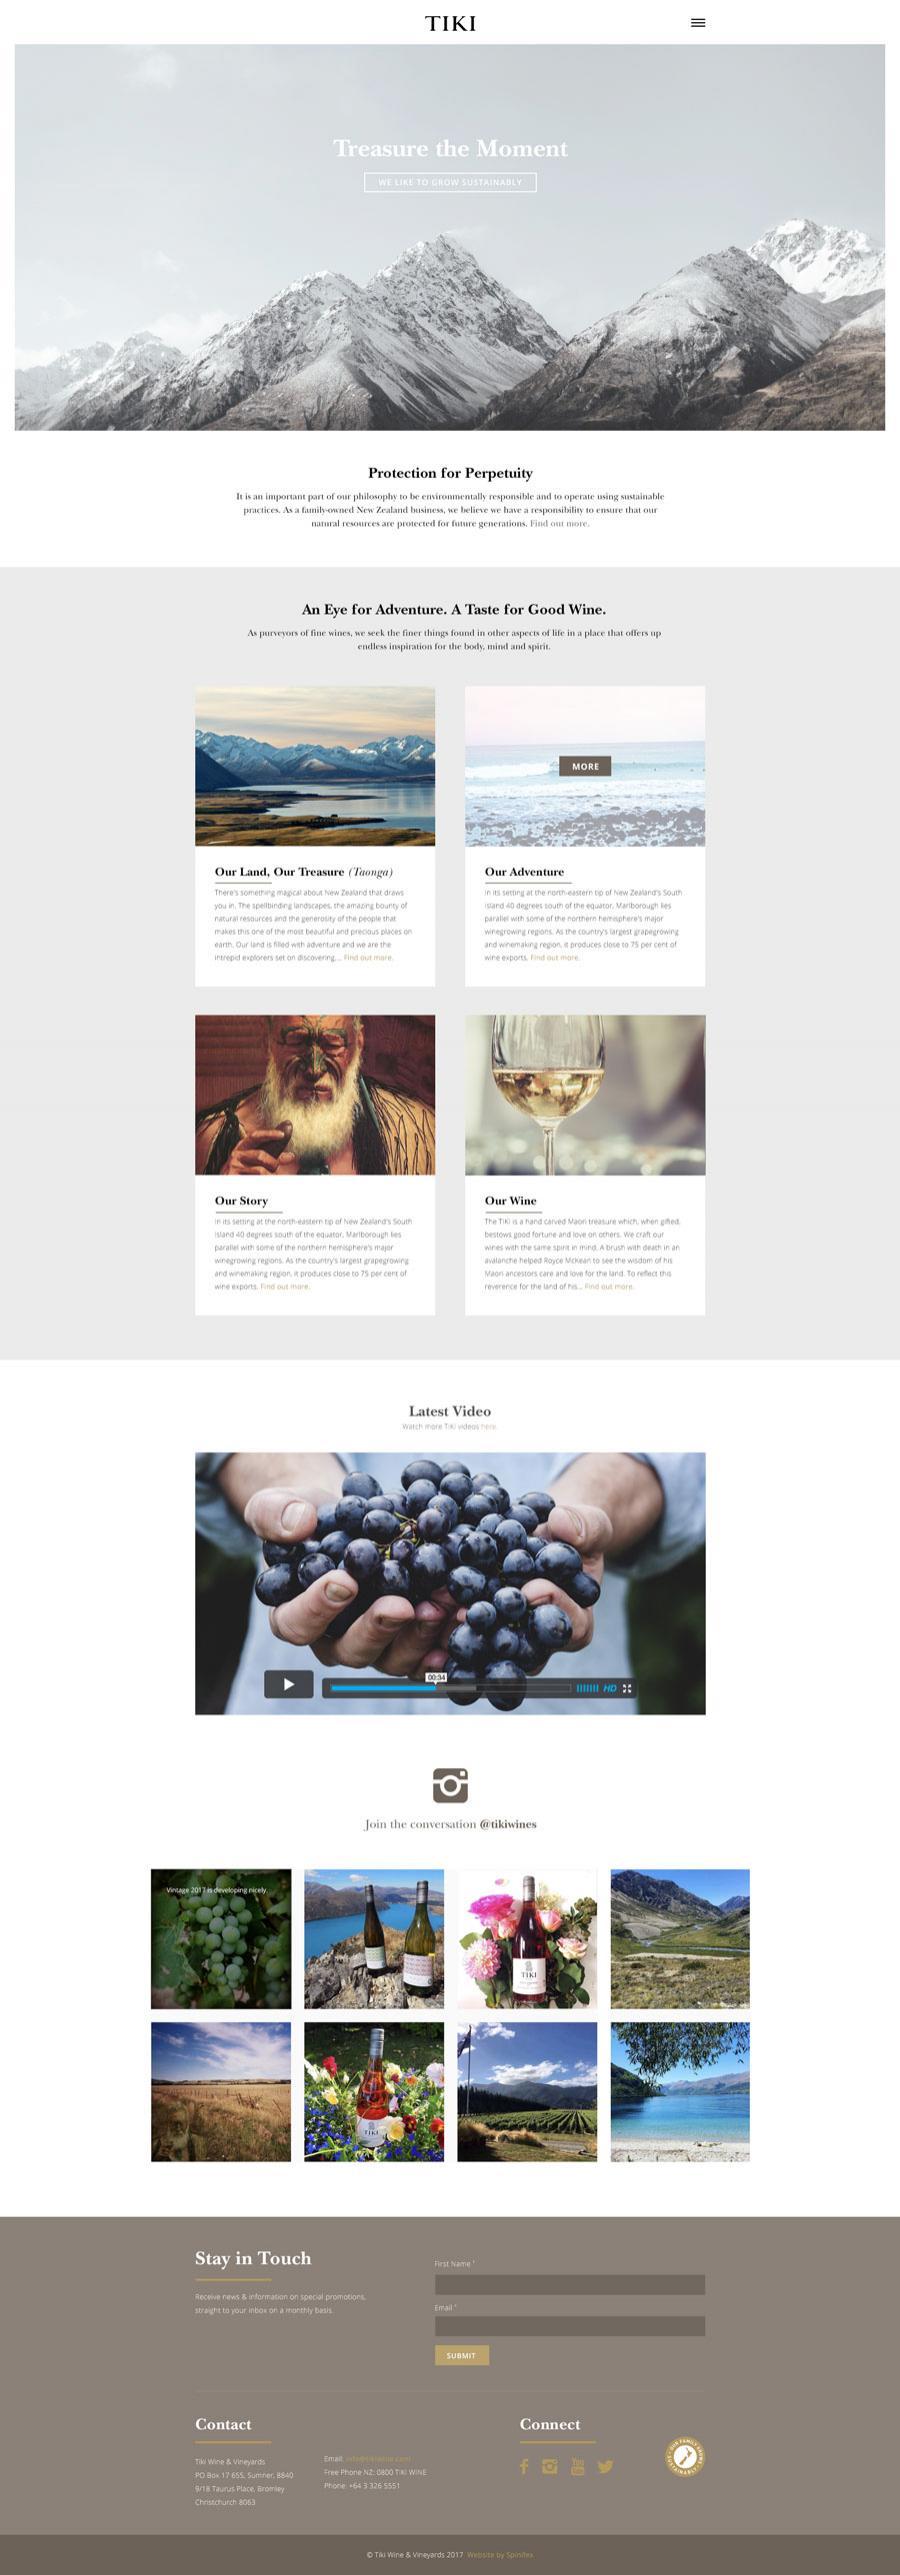 Tiki Wines Website 2017